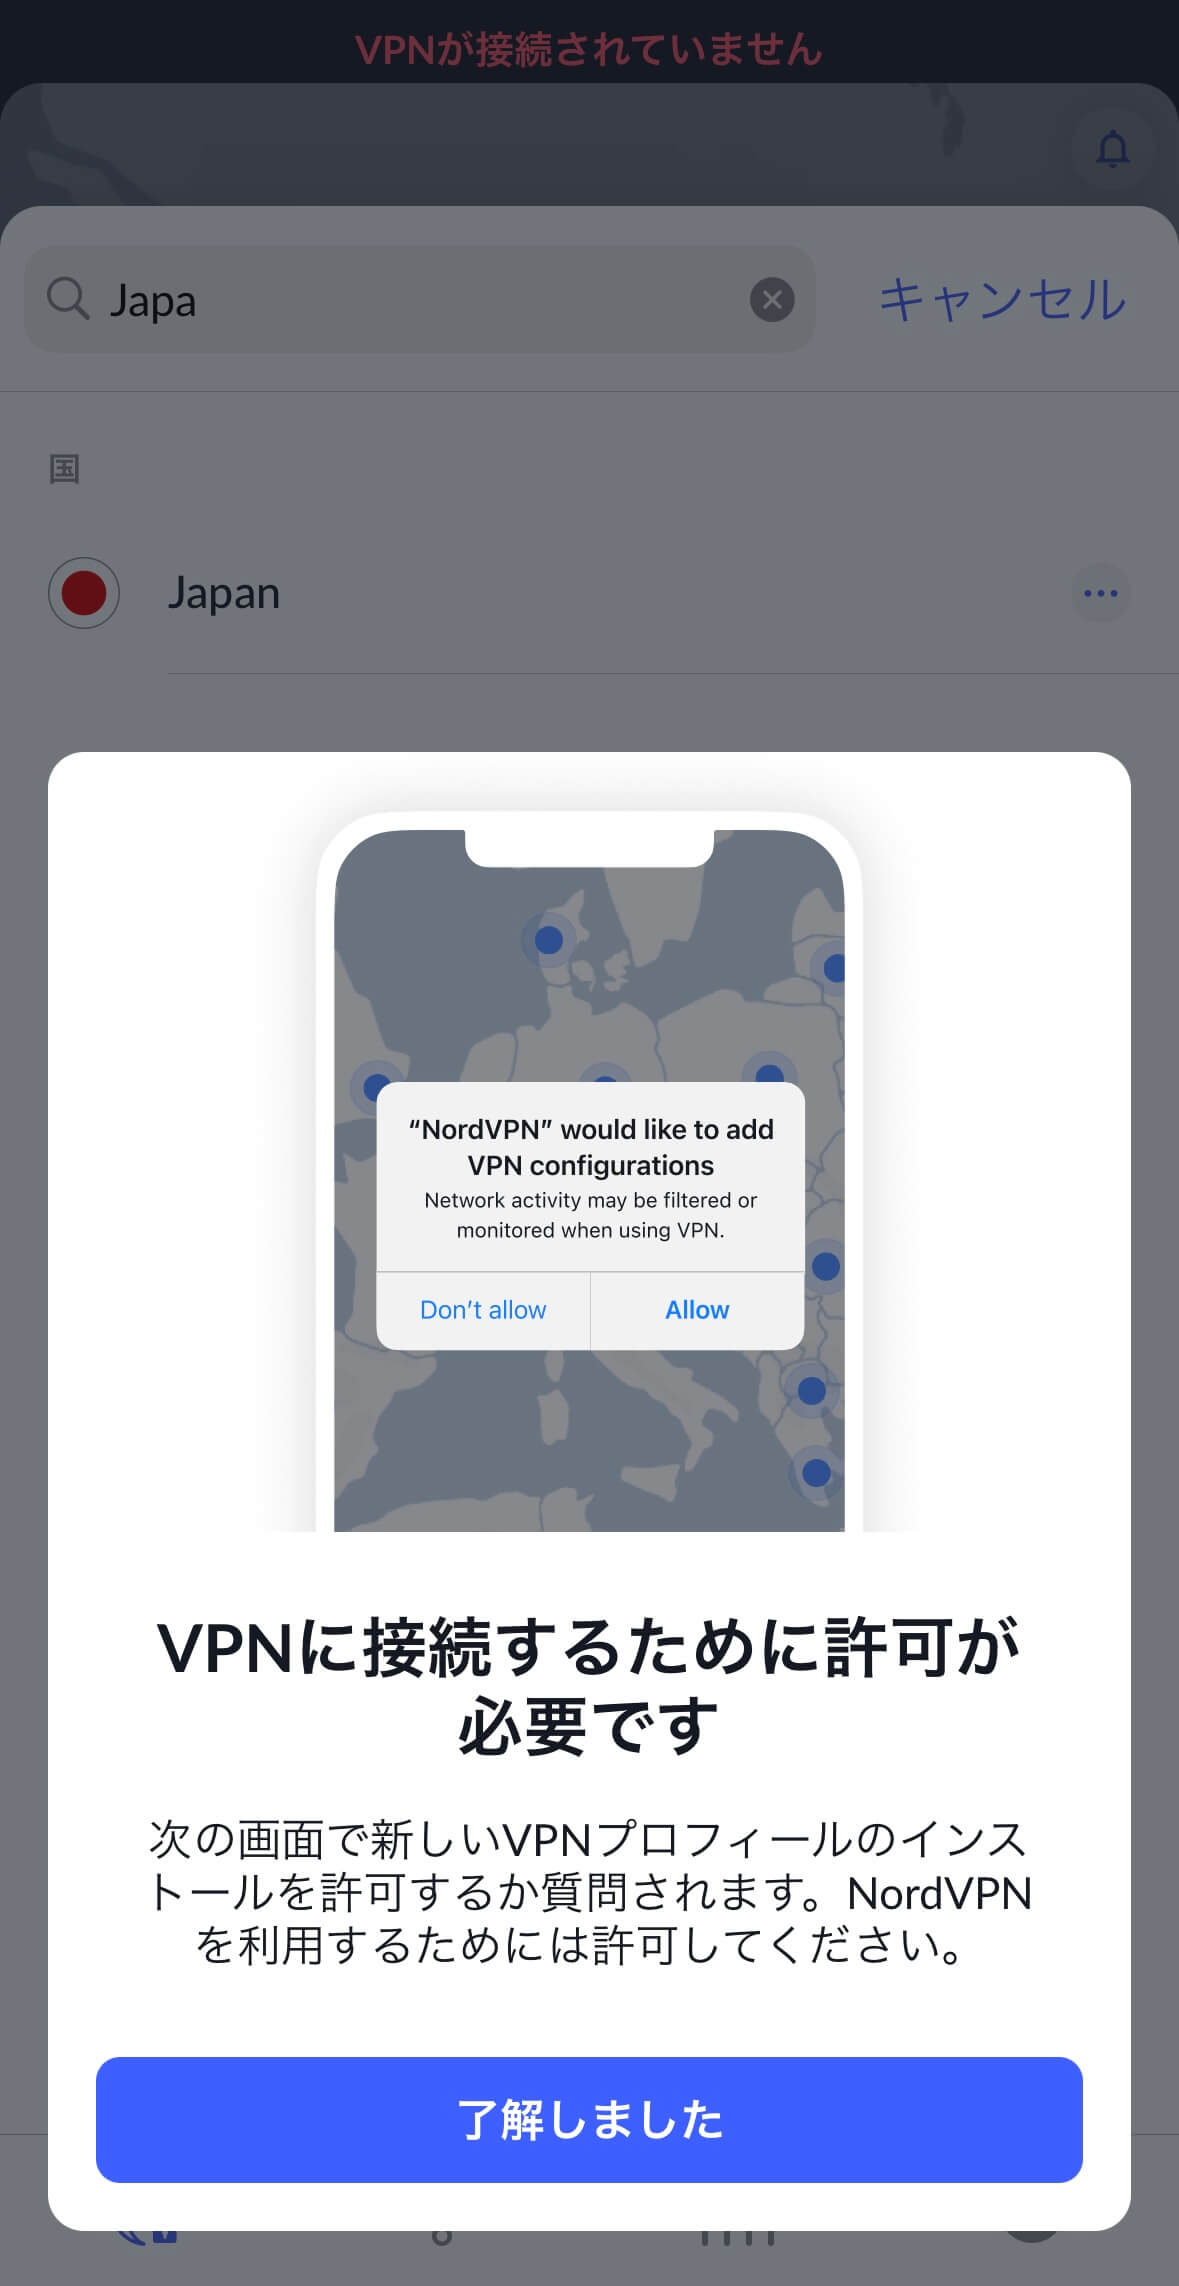 VPN接続の許可「了解しました」をタップする